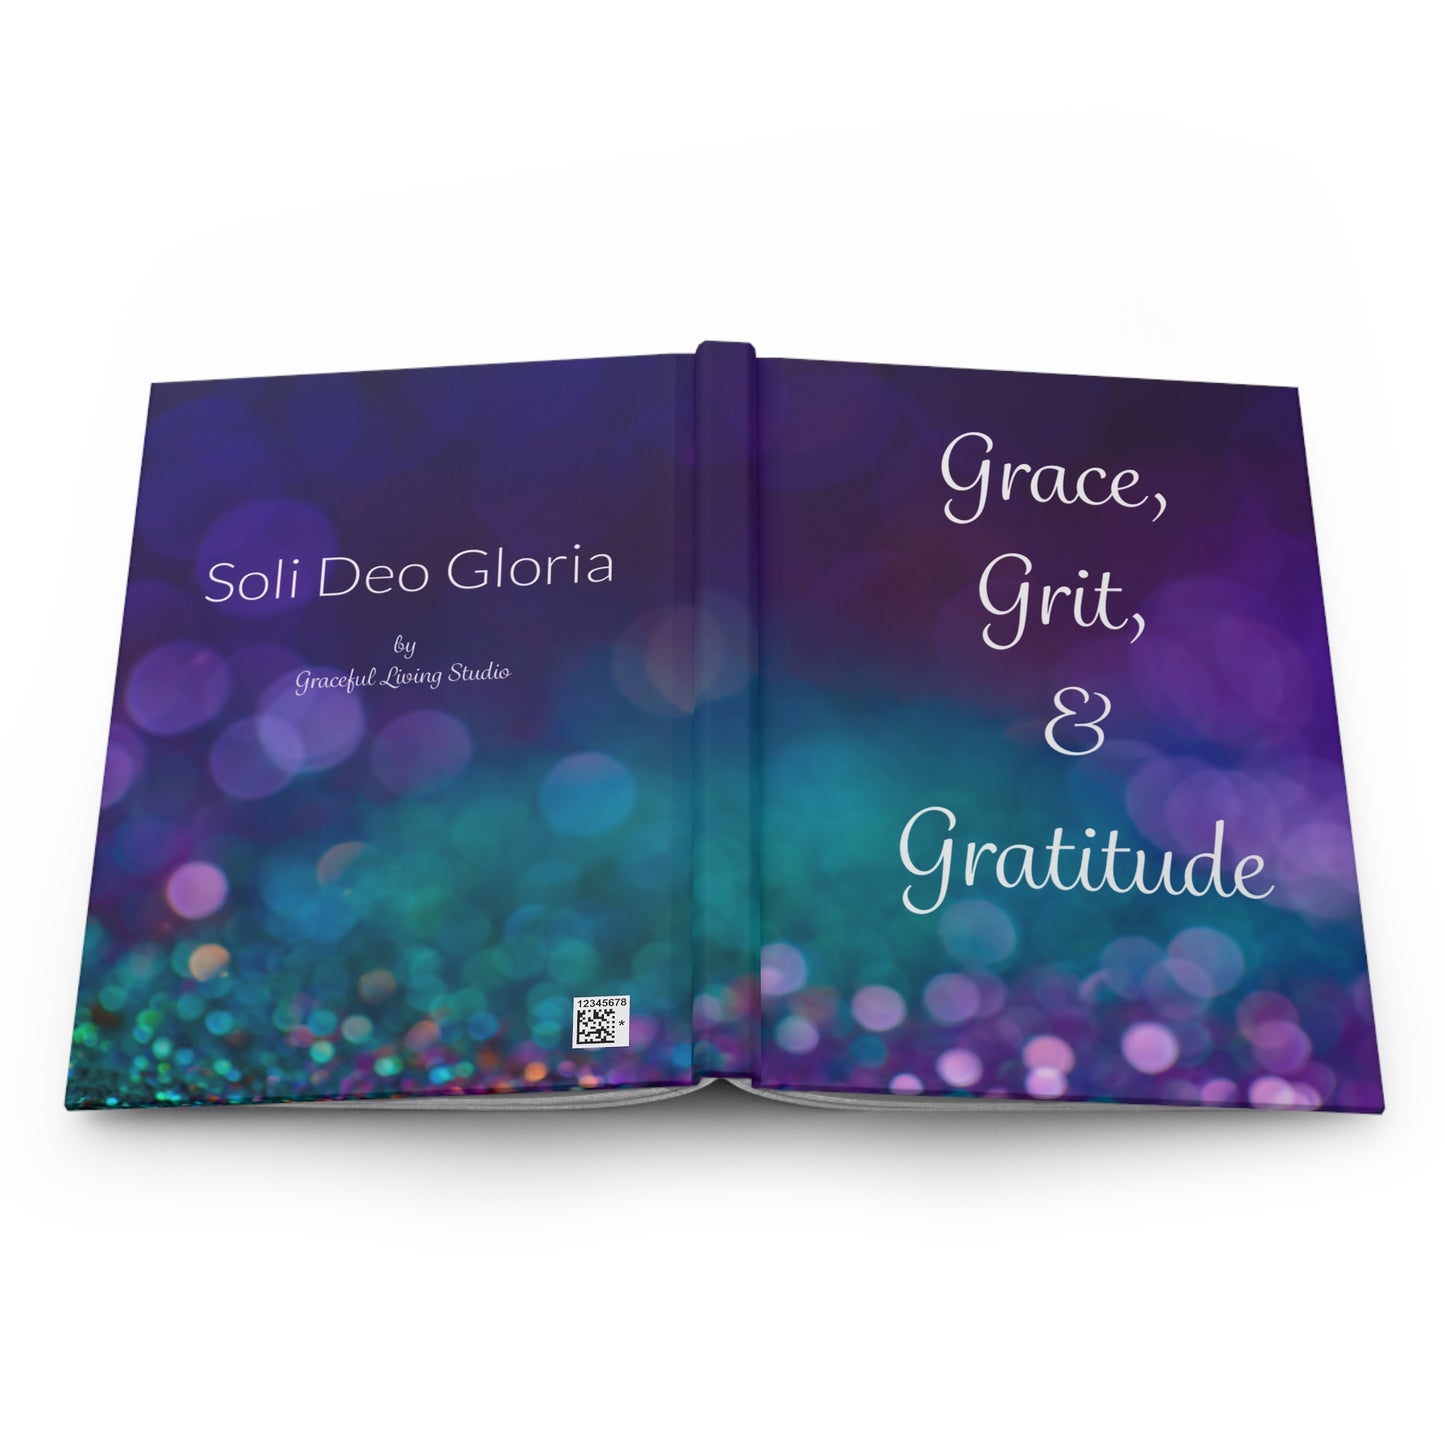 Hardcover Journal - Grace, Grit, & Gratitude with Purple Sparkle